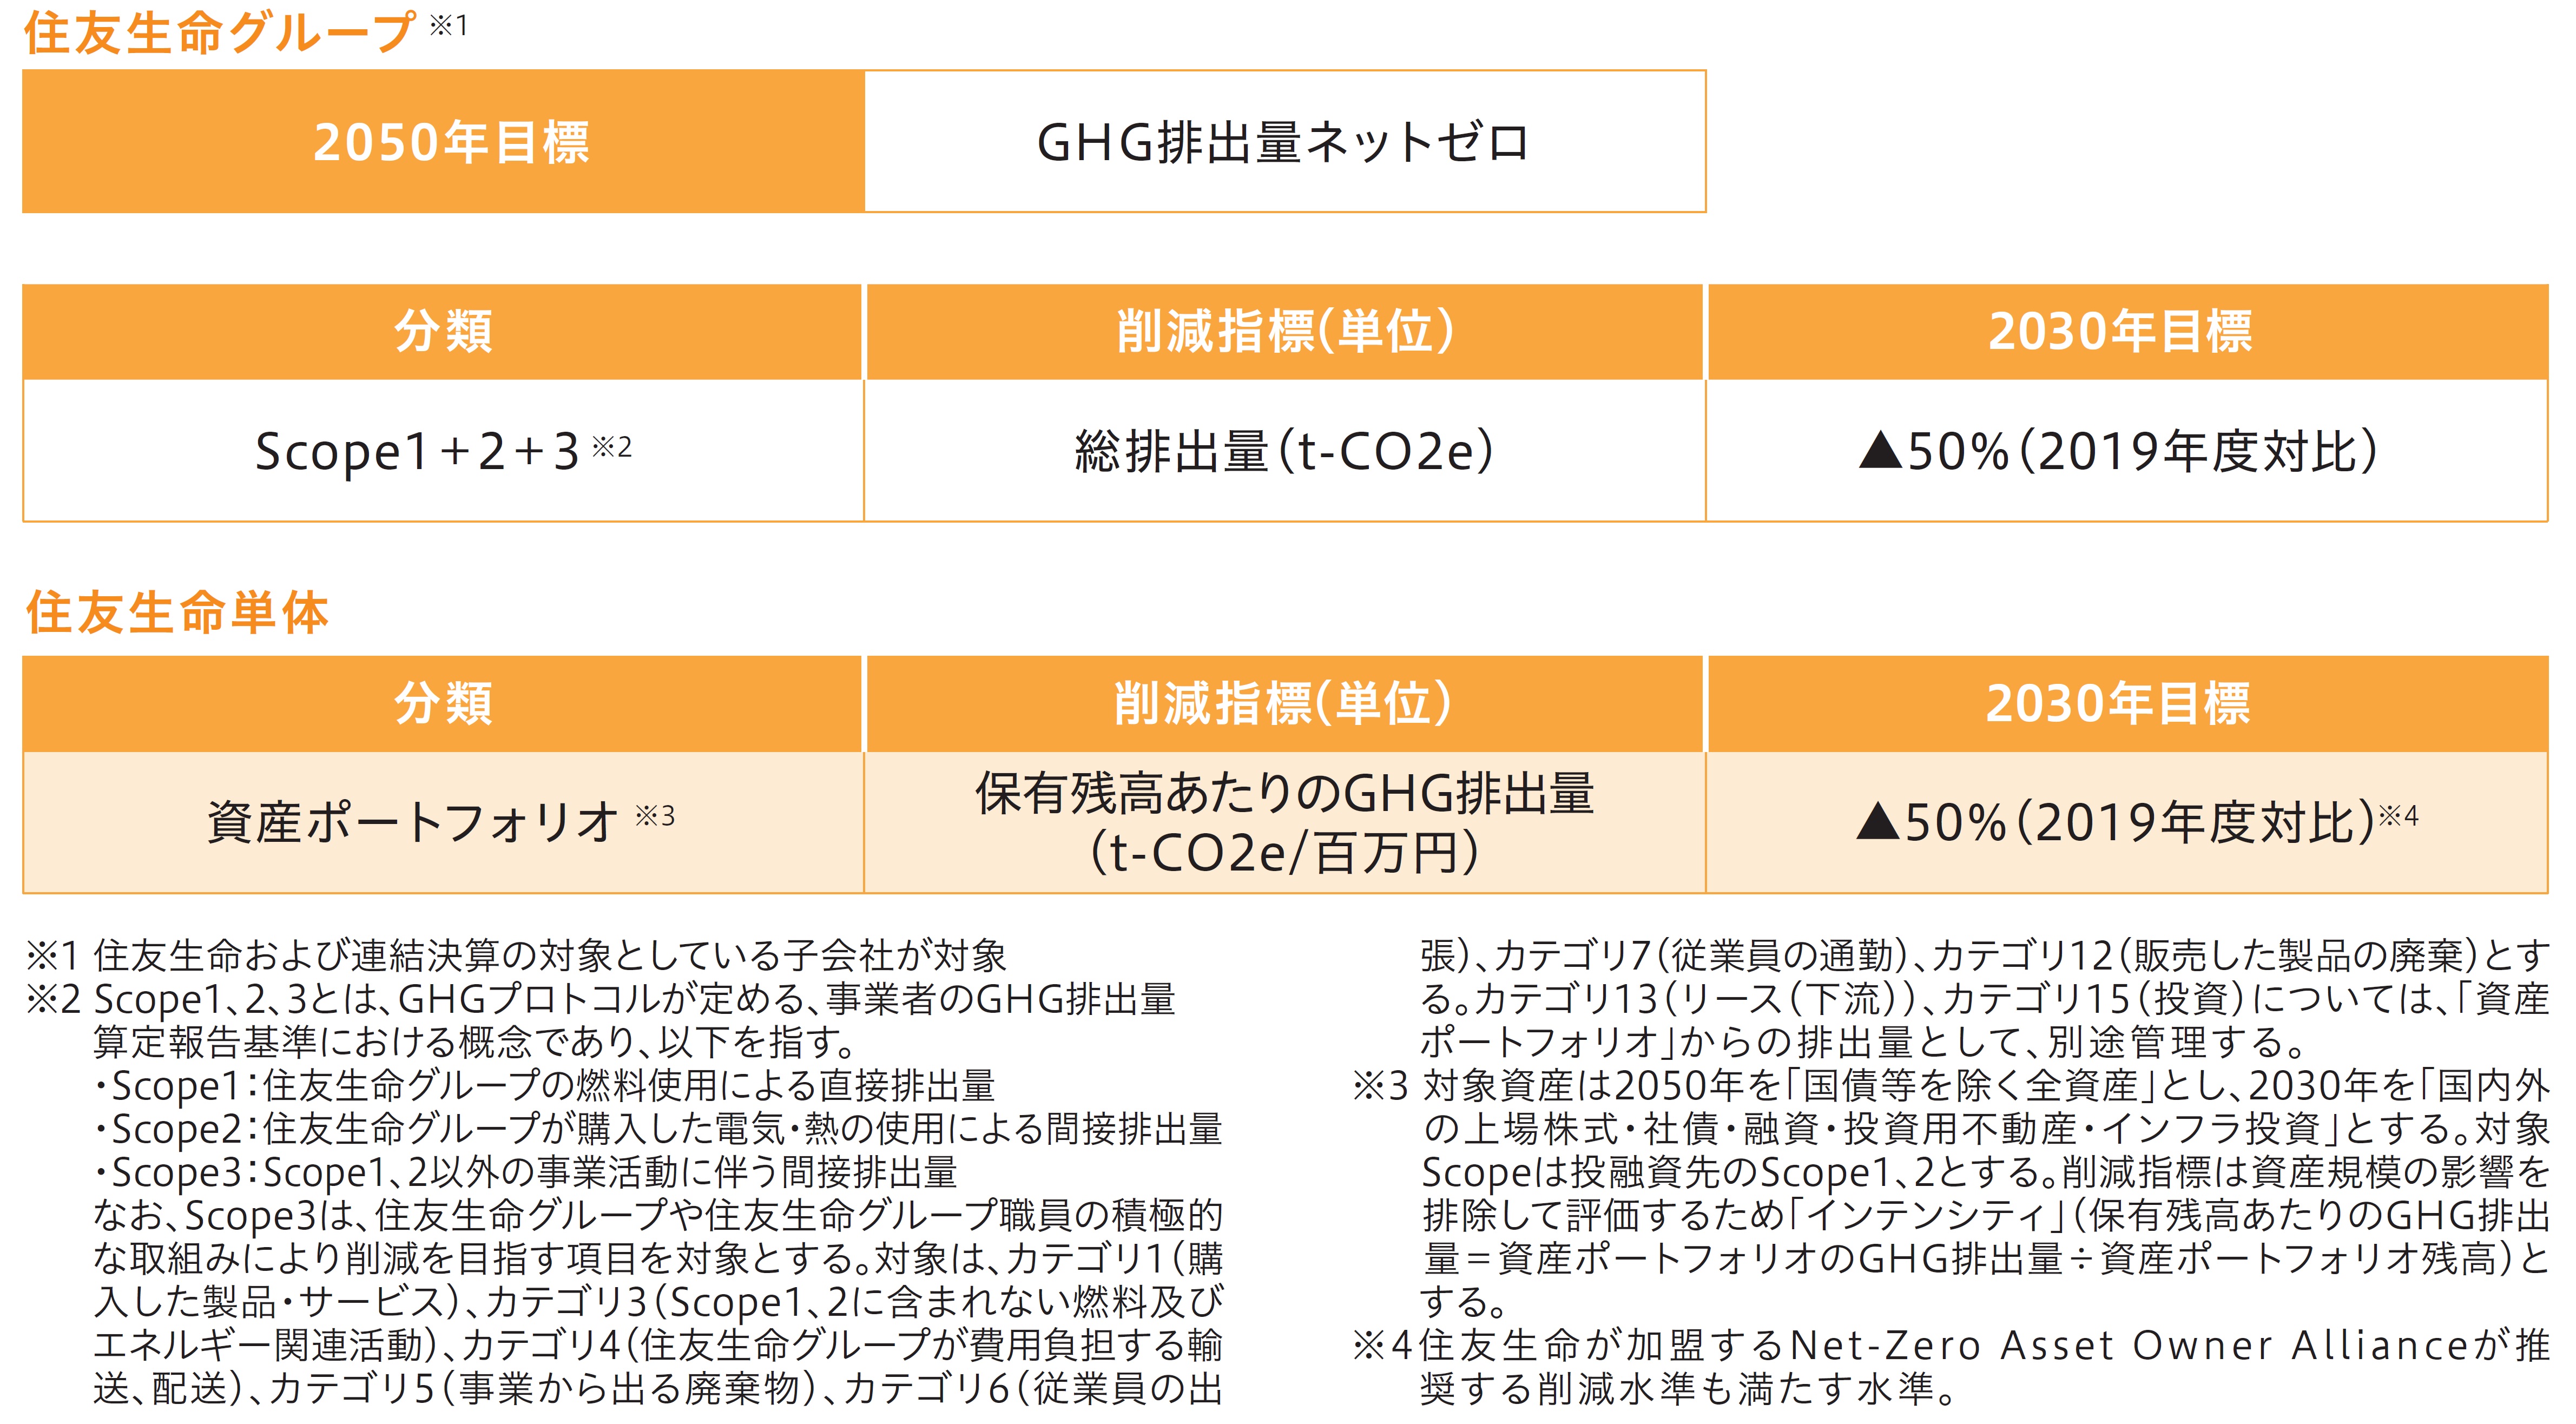 GHG排出量目標